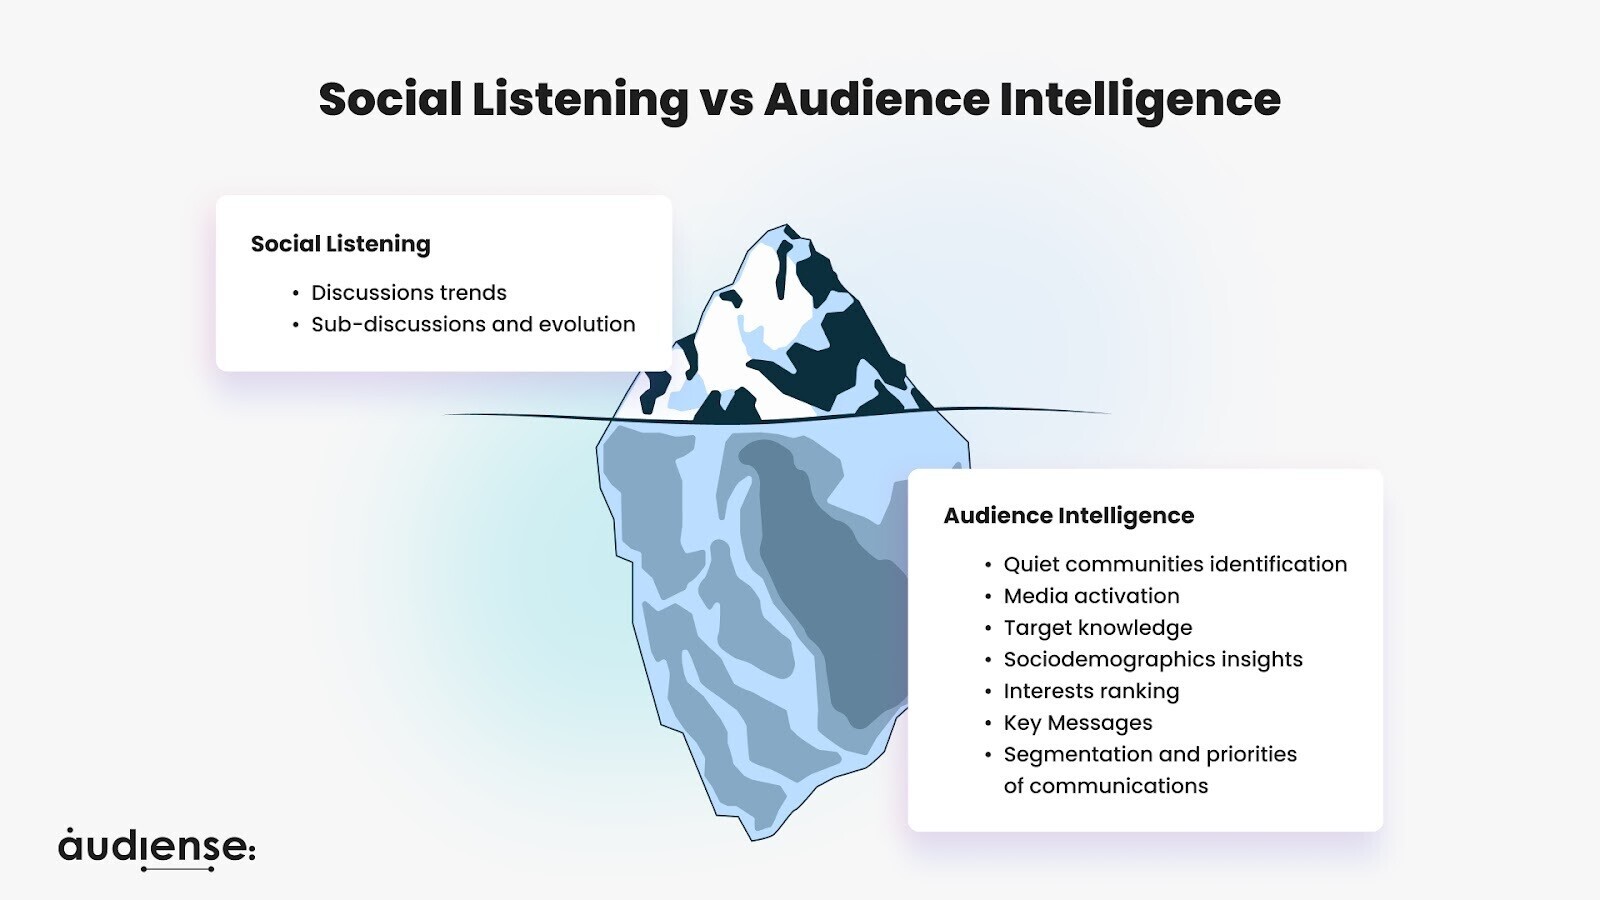 "Social Listening vs. Audience Intelligence" infographic